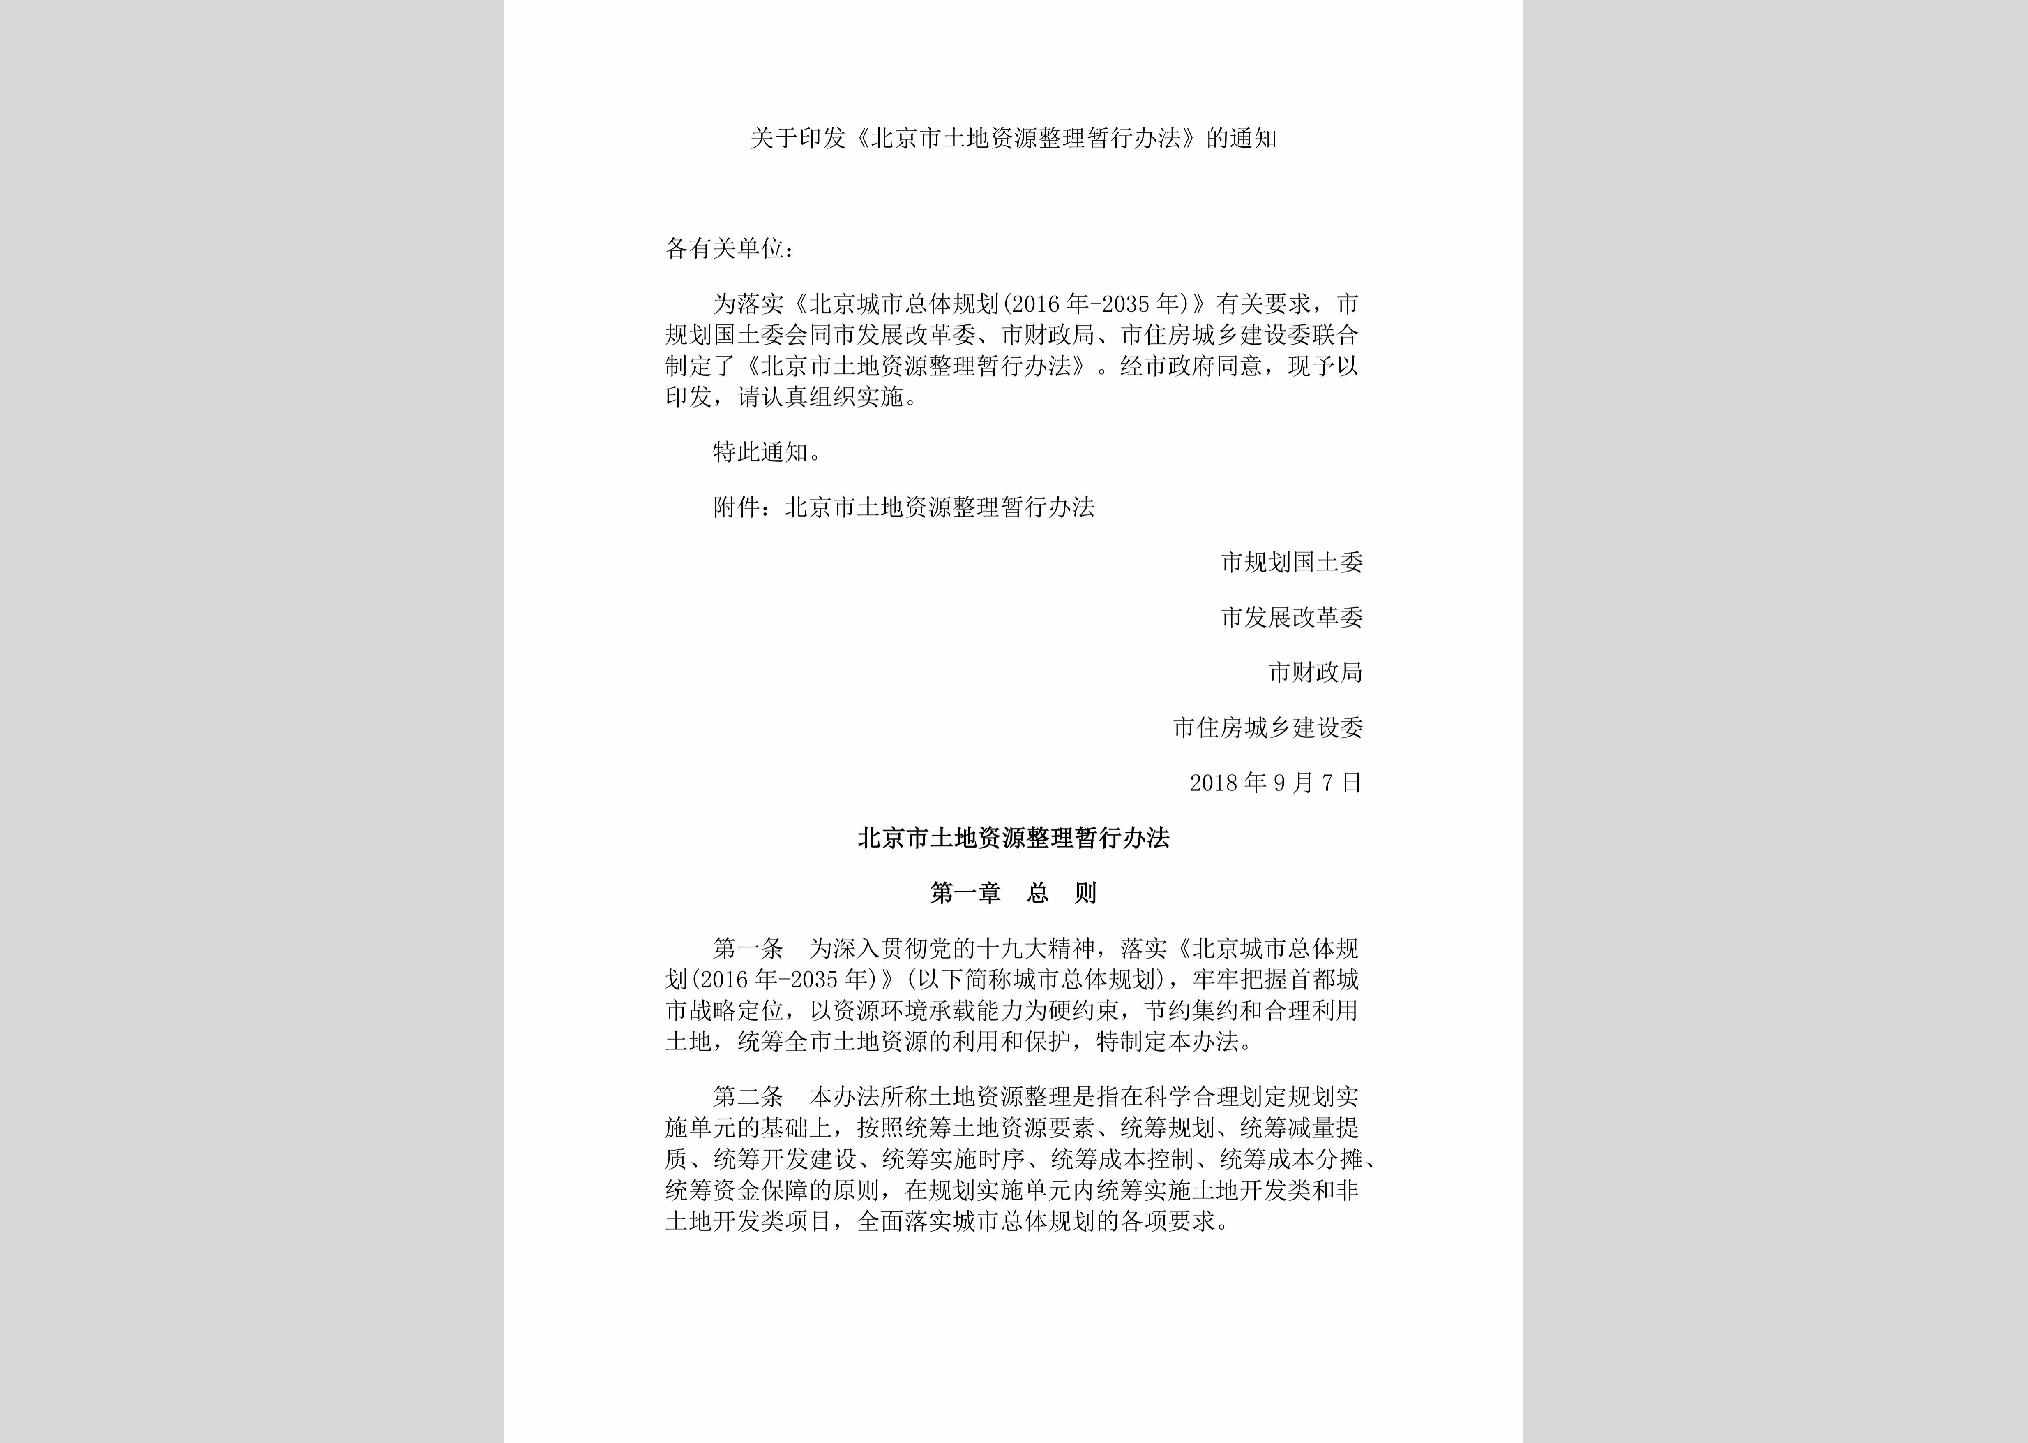 BJ-TDZYZLTZ-2018：关于印发《北京市土地资源整理暂行办法》的通知